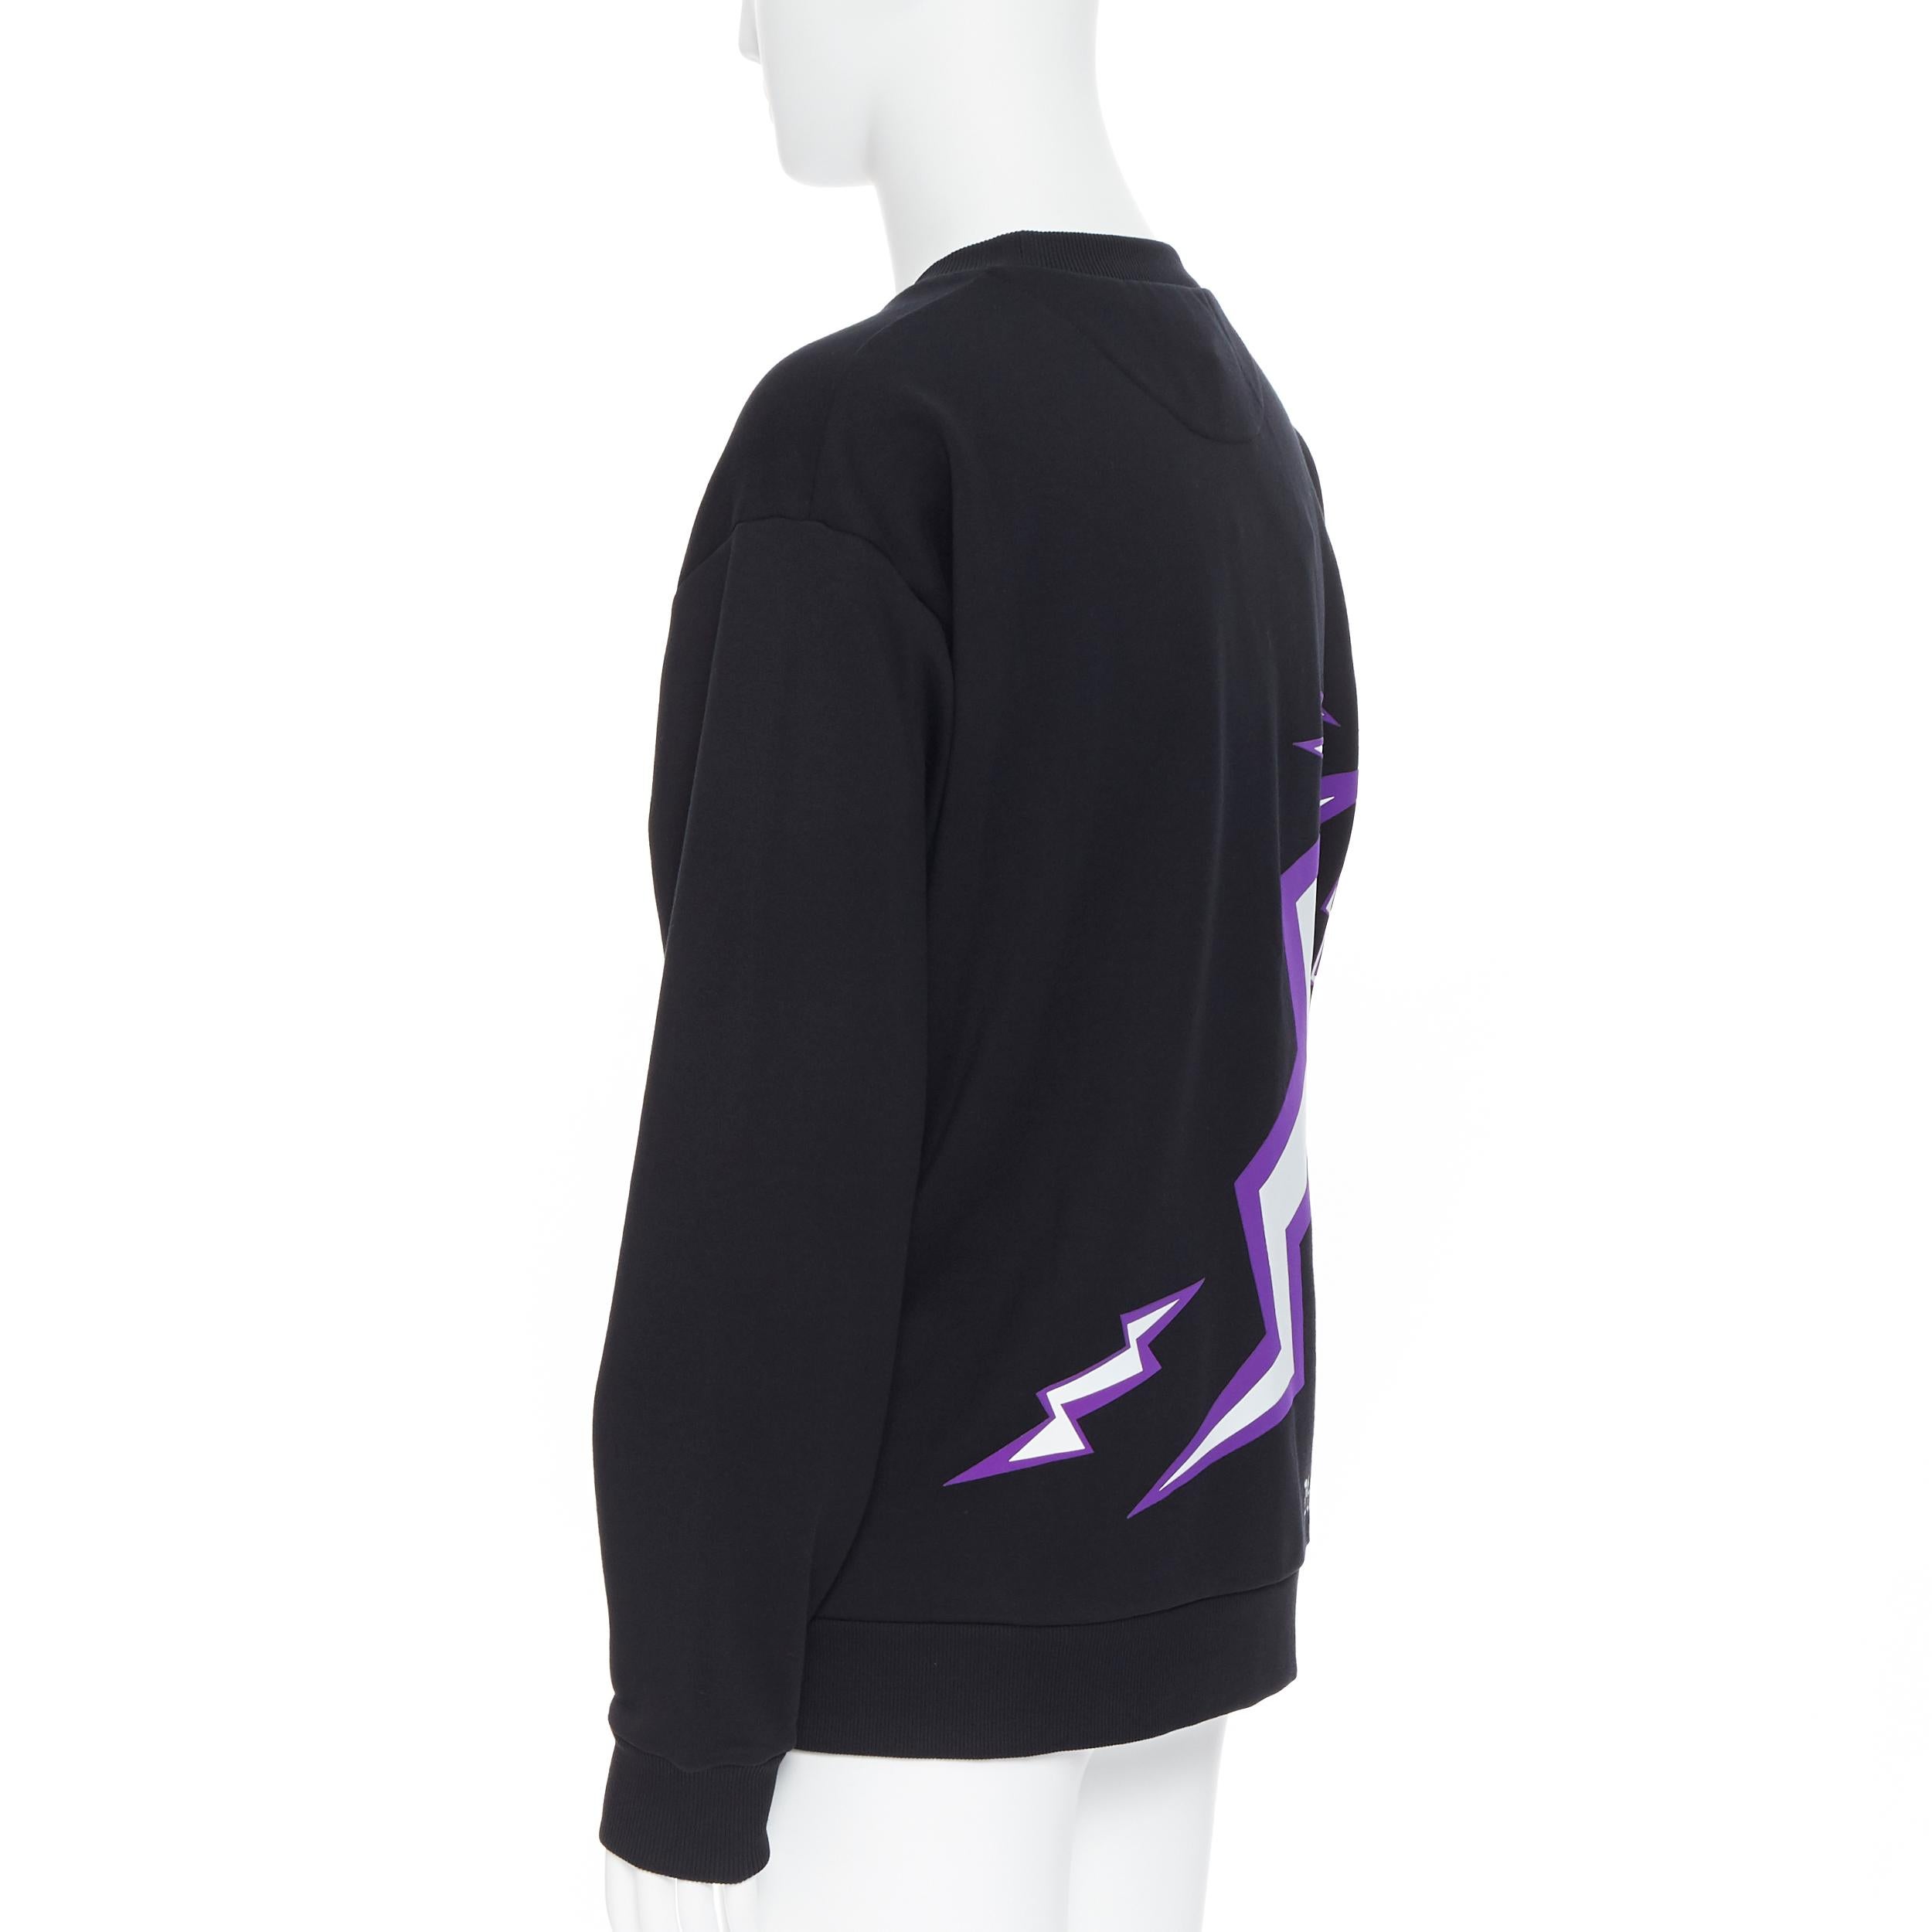 Black new PRADA 2019 Frankenstein Thunder Lightning Bolt black sweatshirt sweater XXL